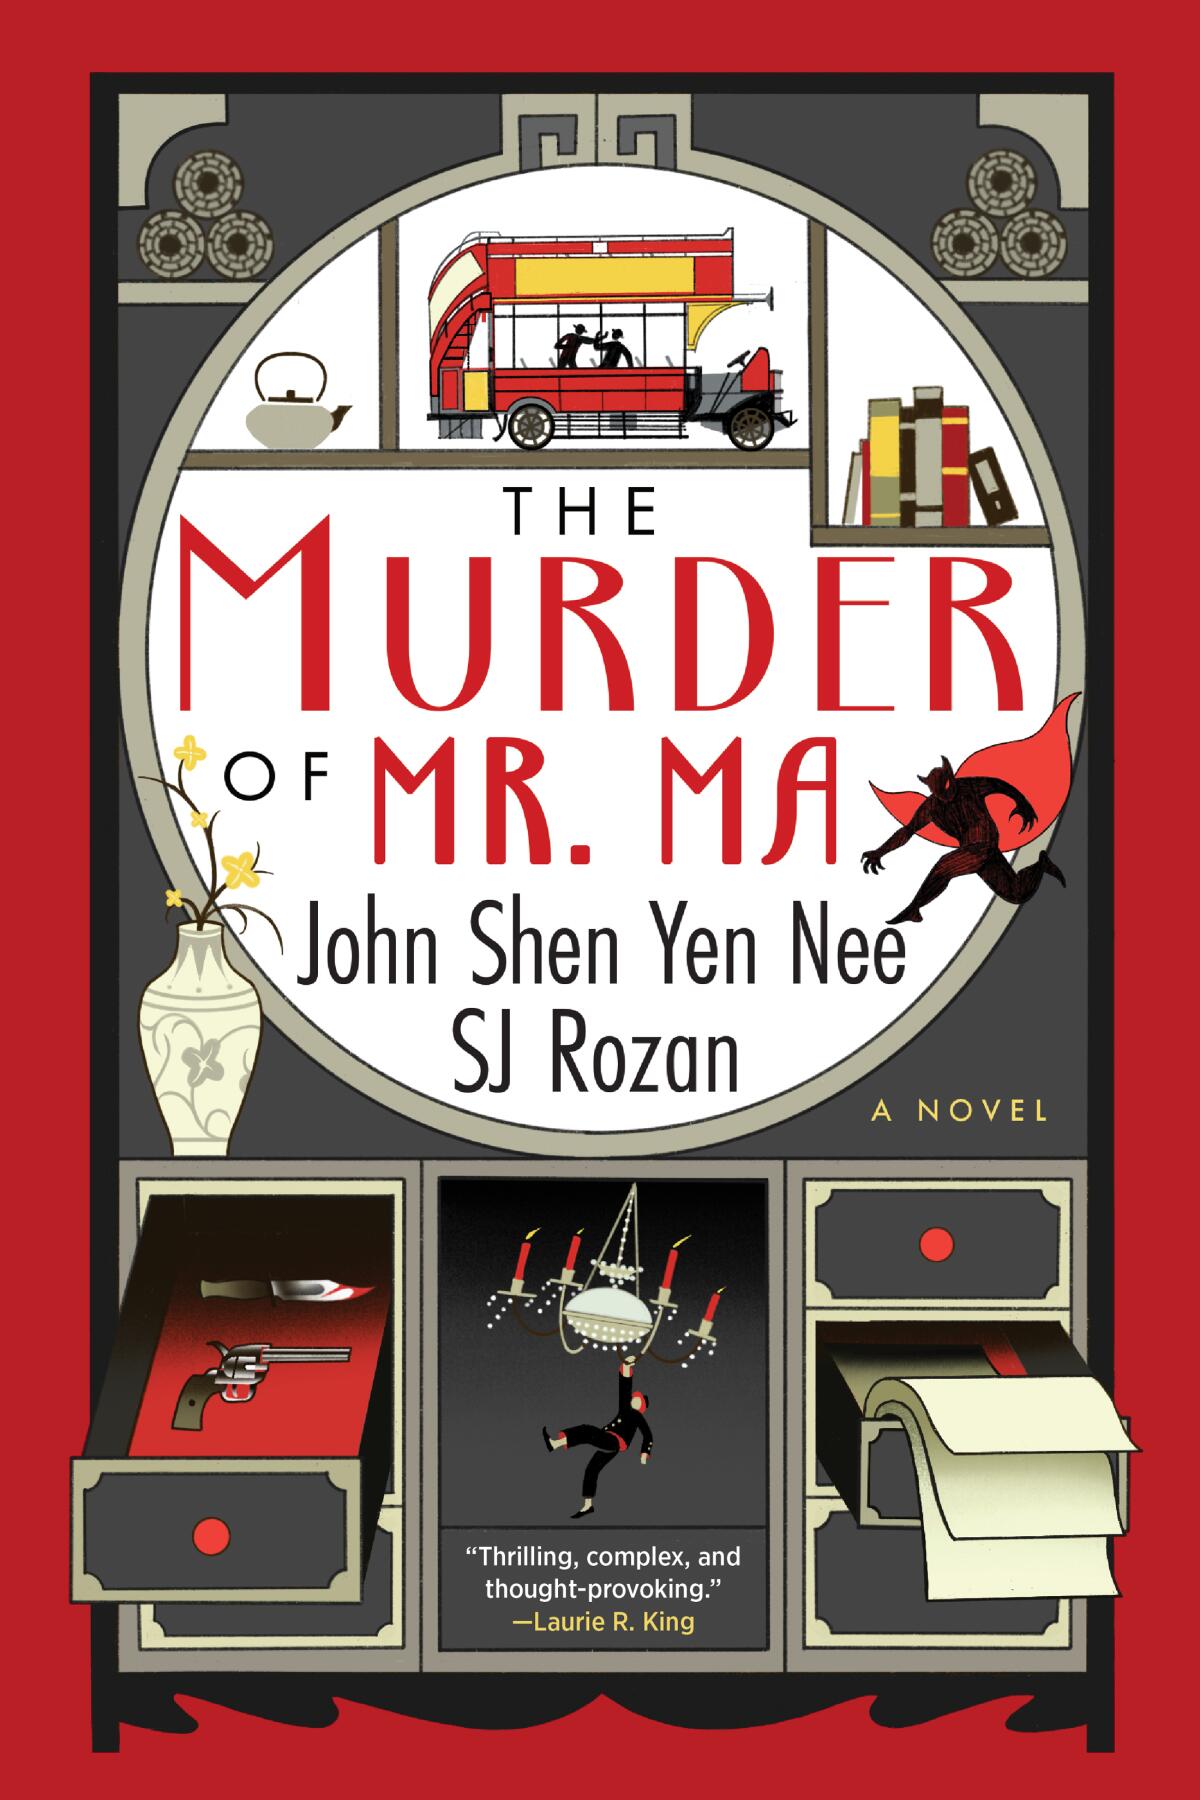 "The Murder of Mr. Ma" by S.J. Rozan and John Shen Yen Nee